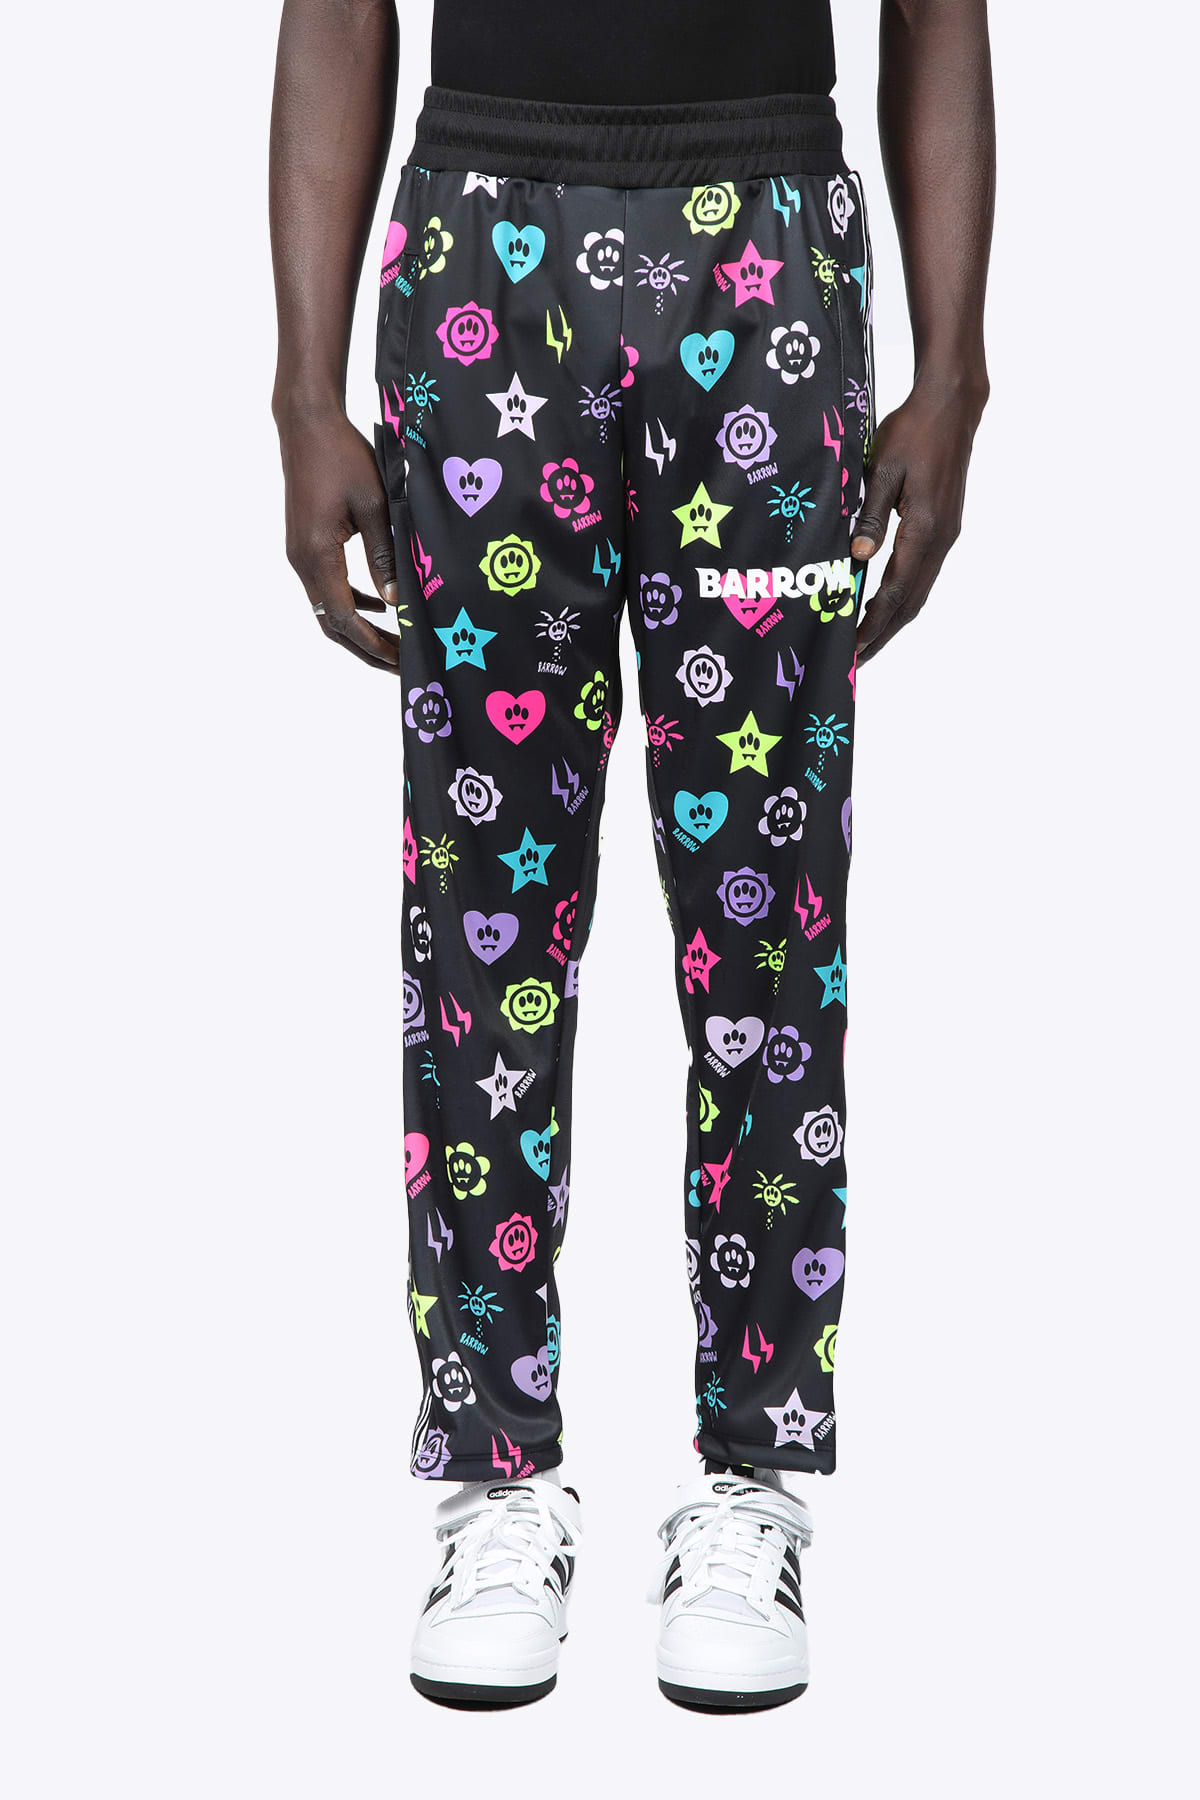 Barrow Triacetate Pants Unisex Black tracksuit pant with multicolor logo pattern print